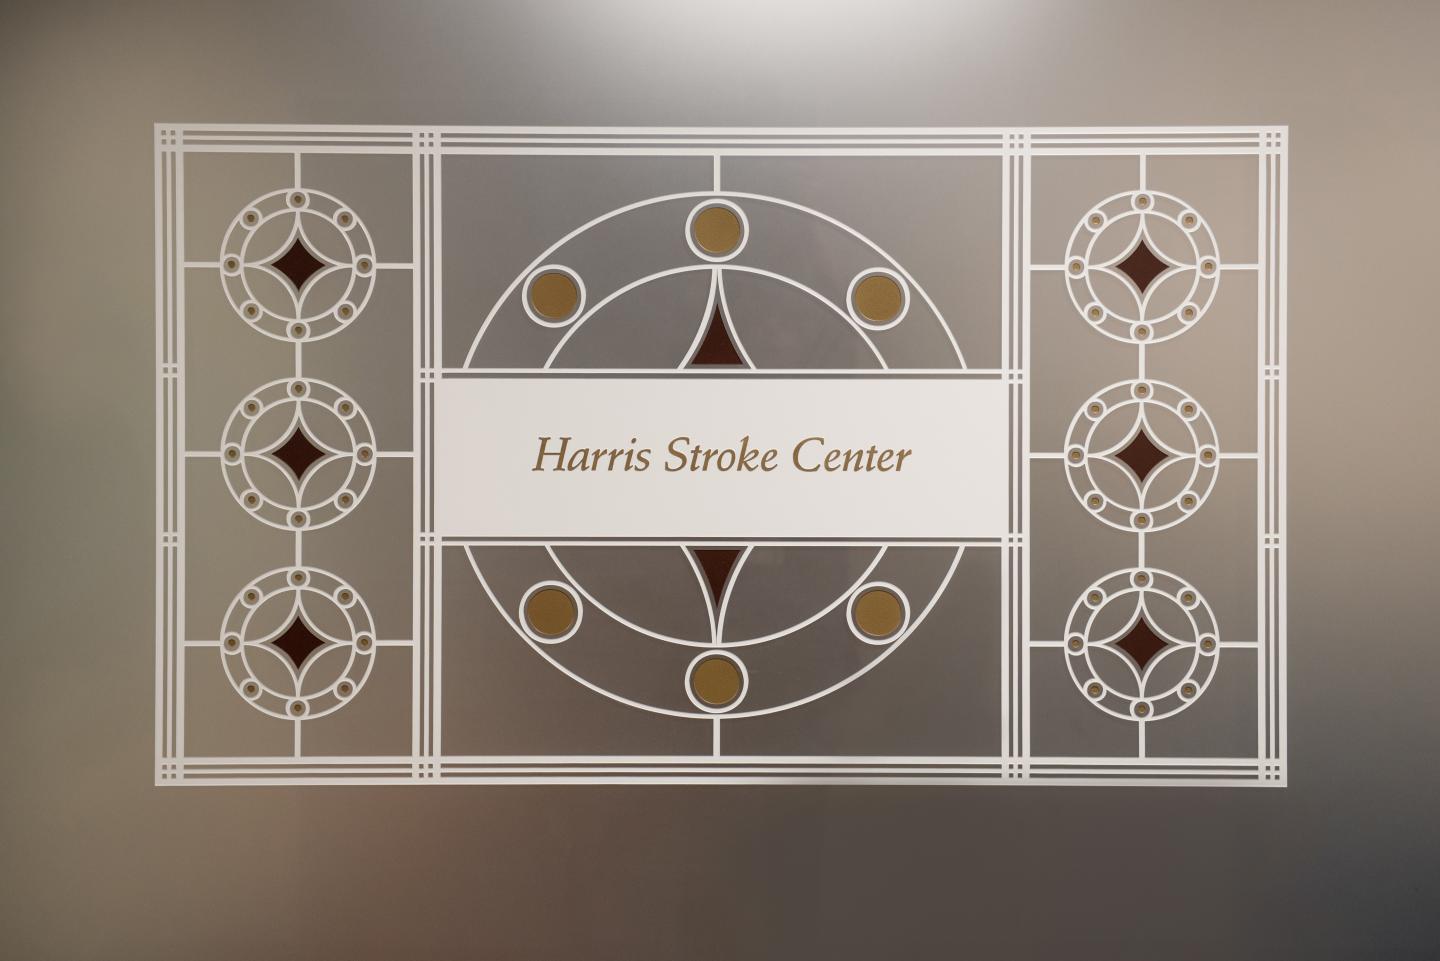 Henry Ford Health System's Harris Stroke Center